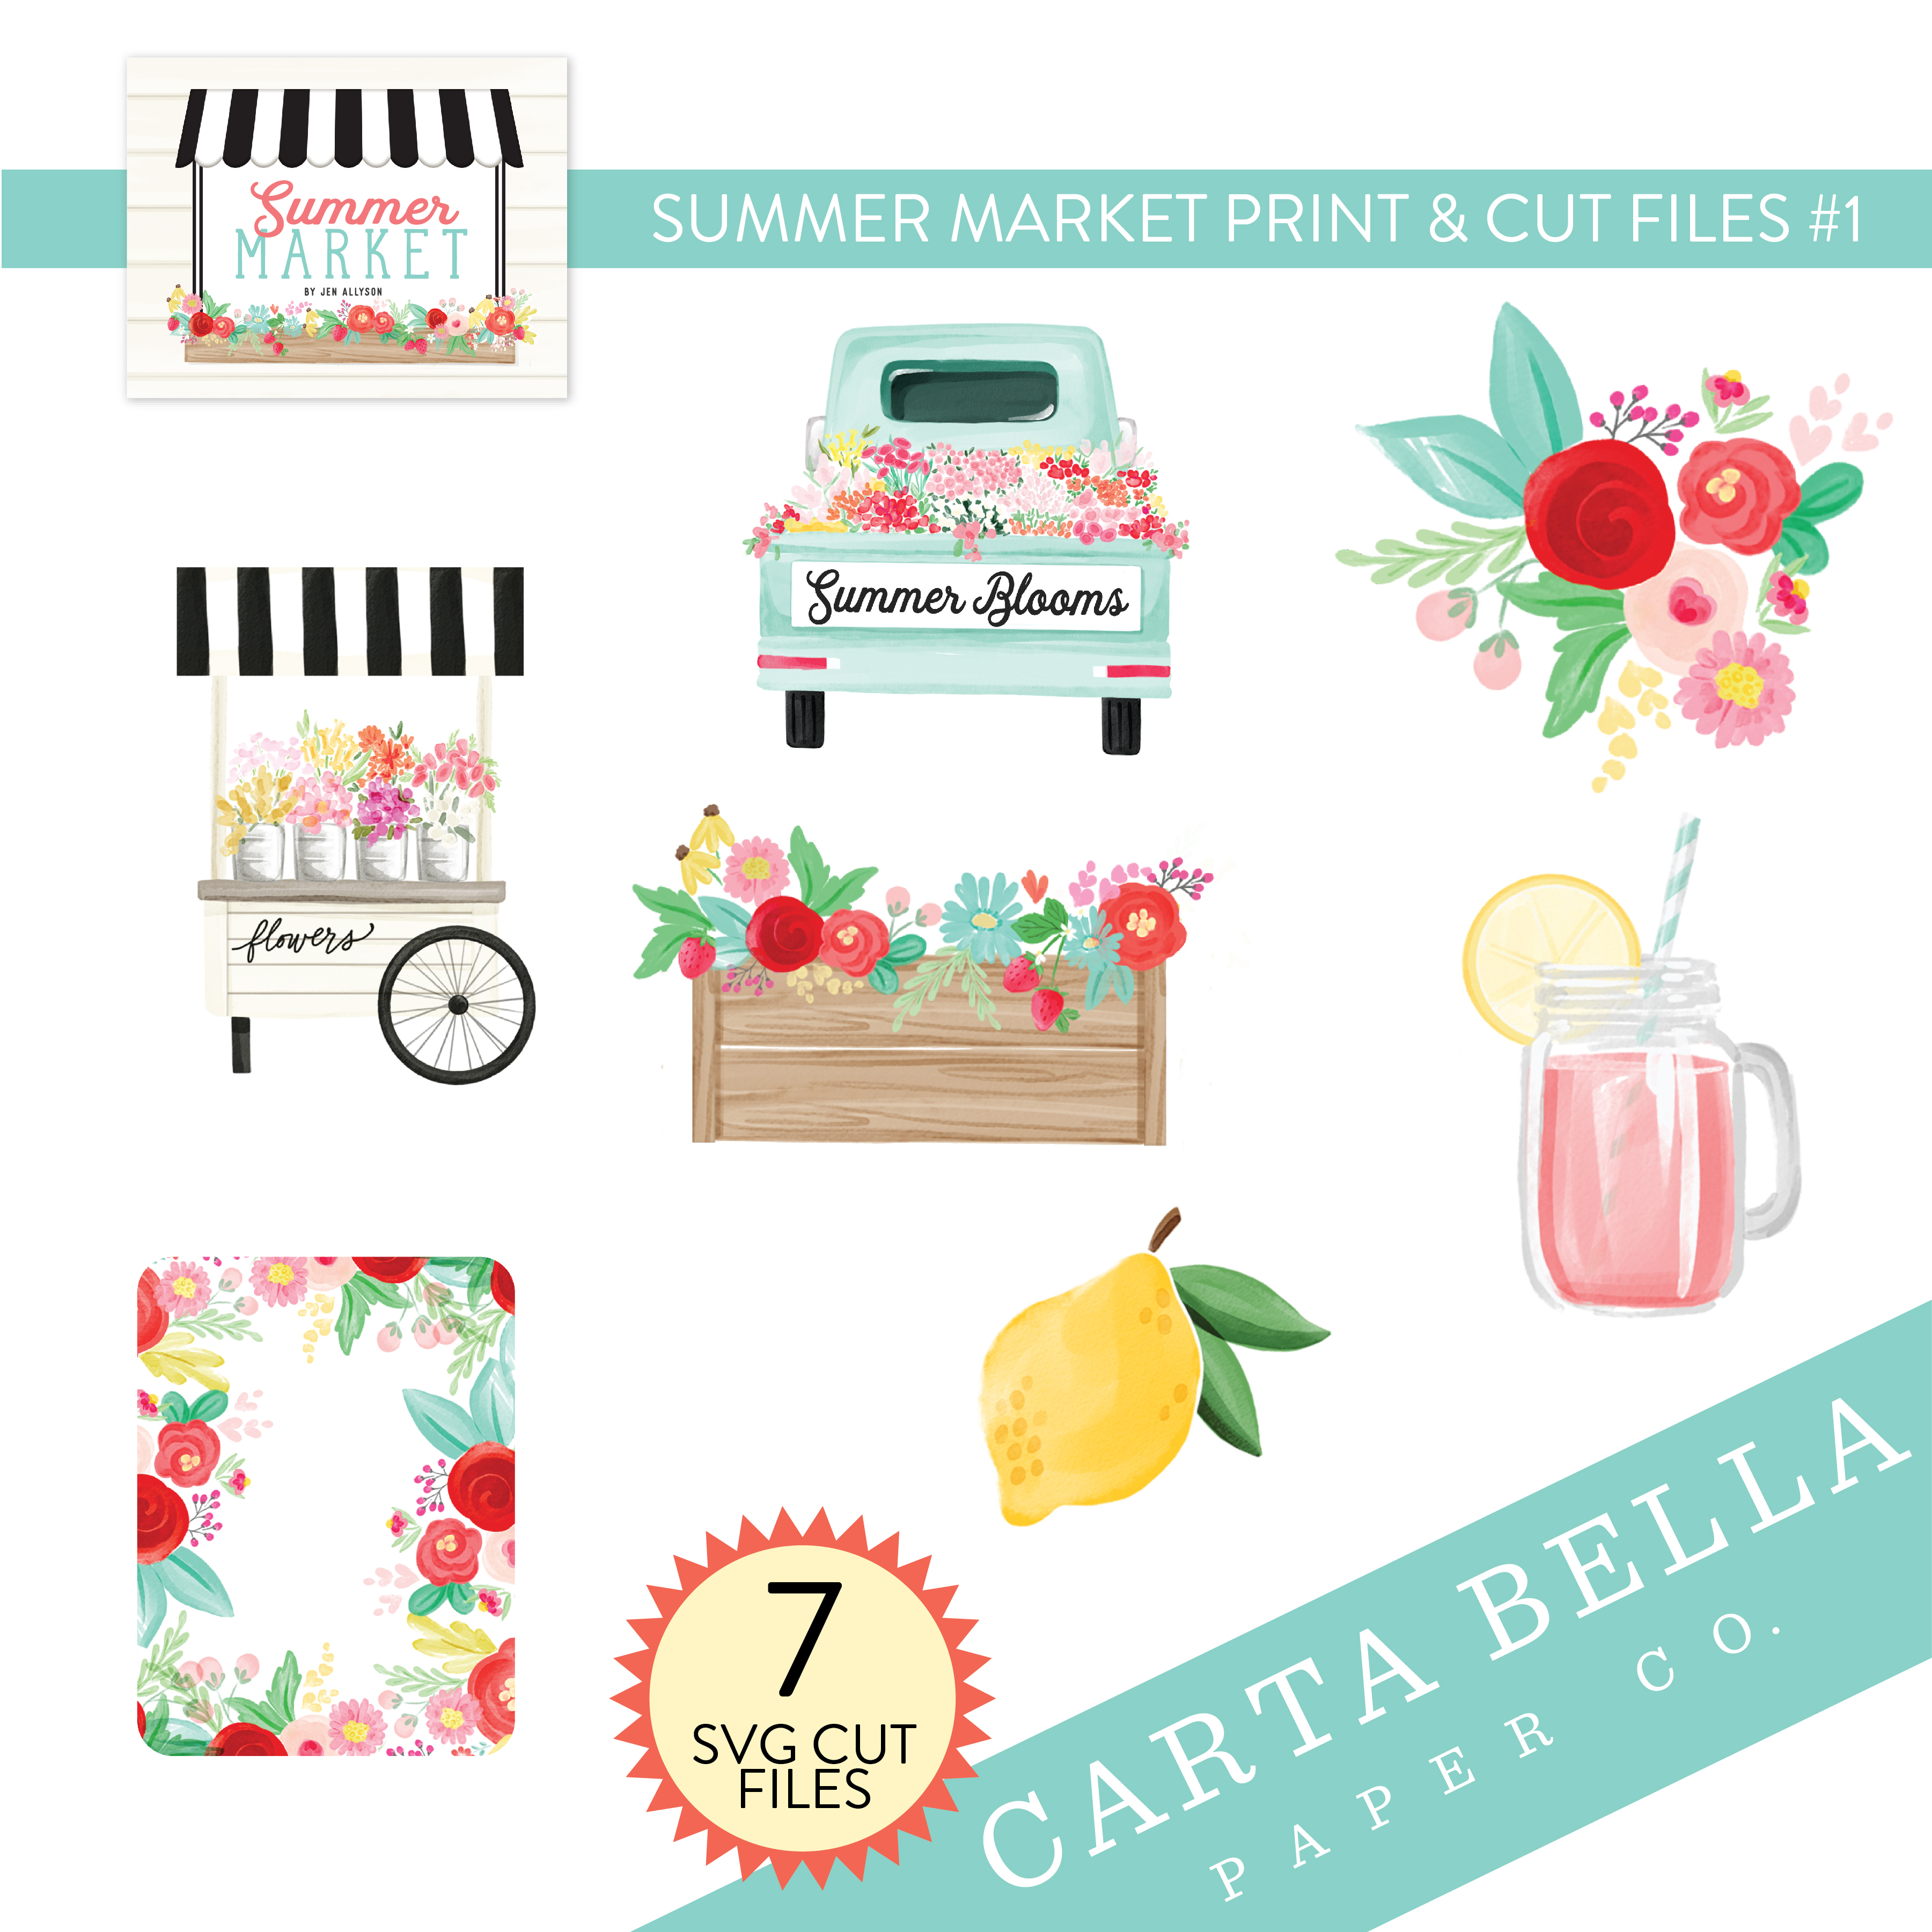 Summer Market Print & Cut Files #1